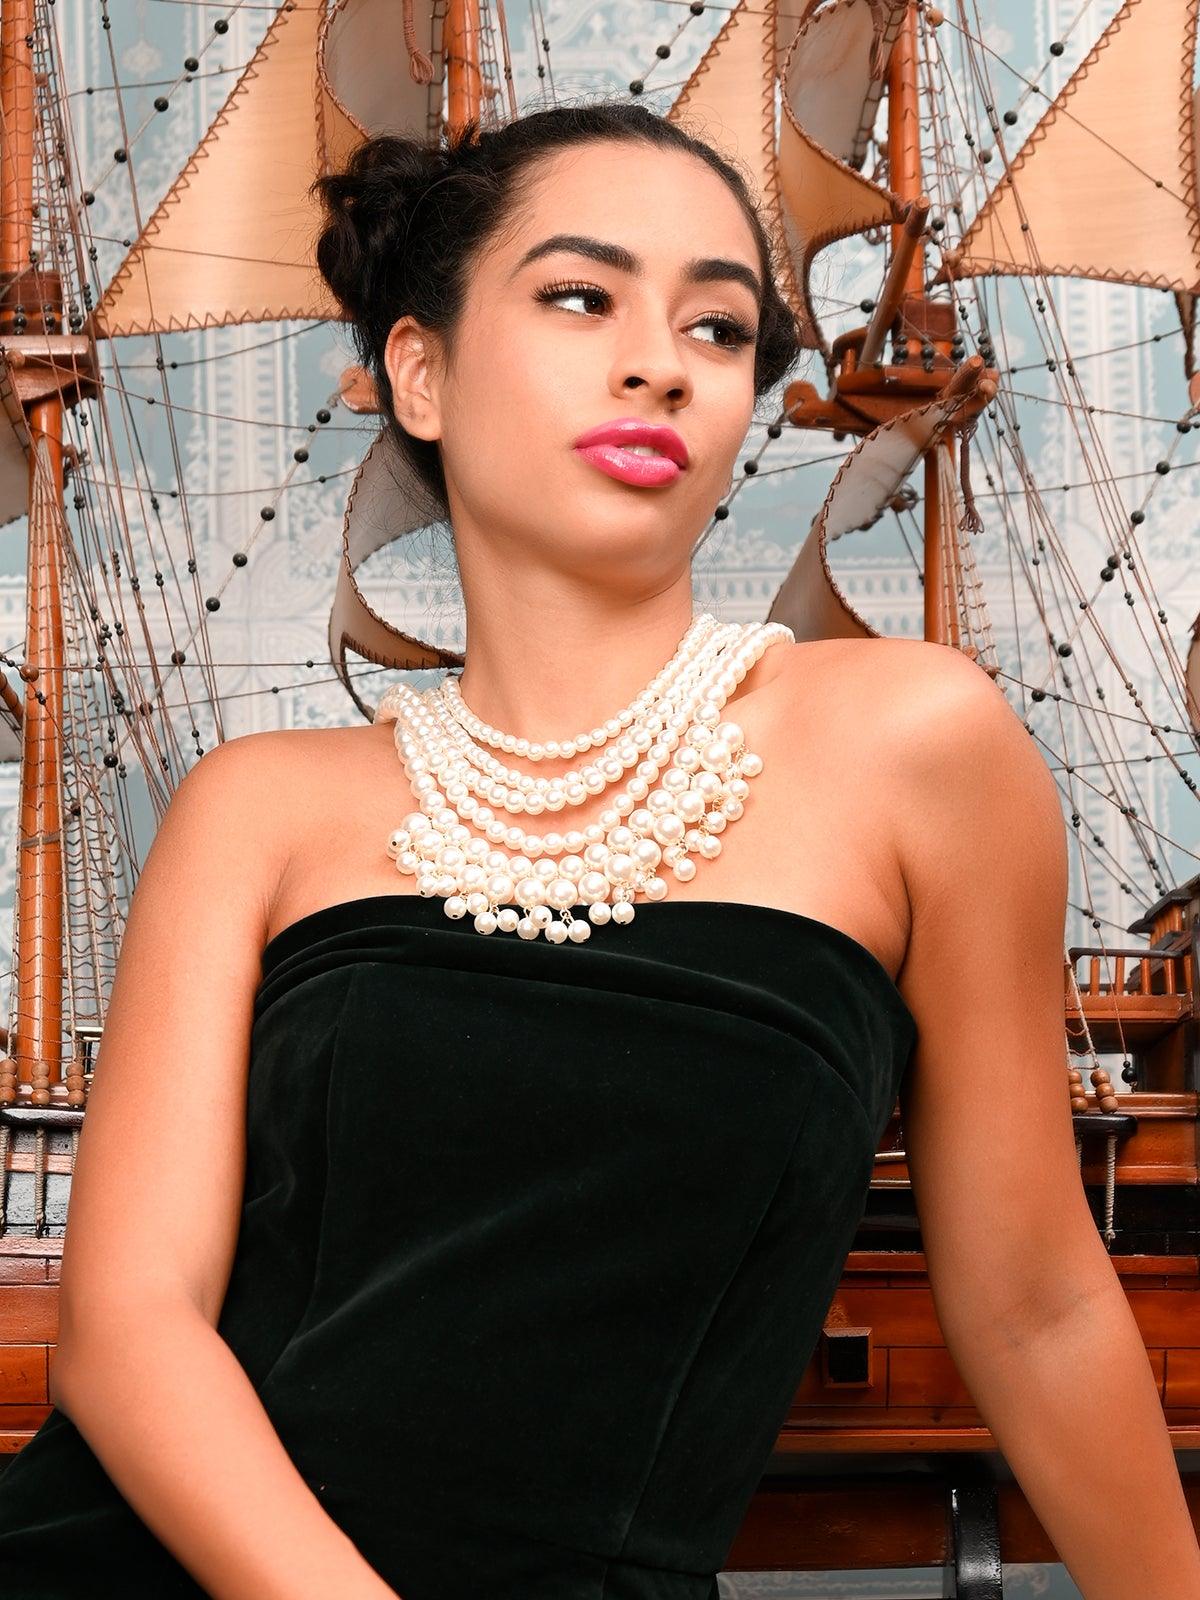 Women's Gorgeous Pearl Necklace Set - Odette